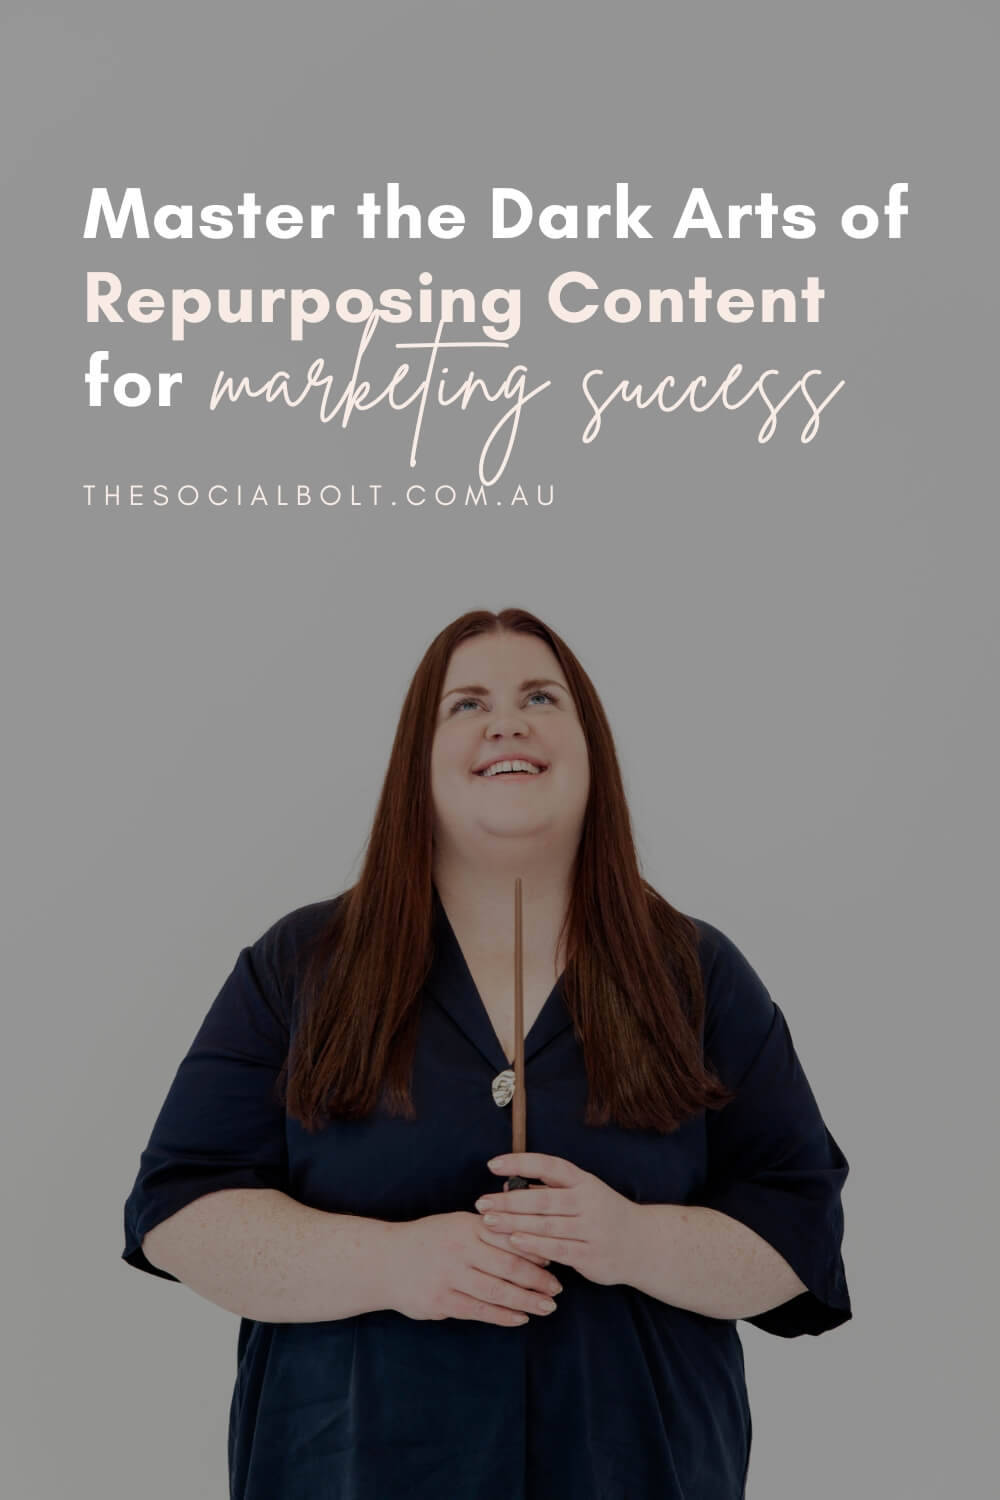 Master the Dark Arts of Repurposing Content for Marketing Success